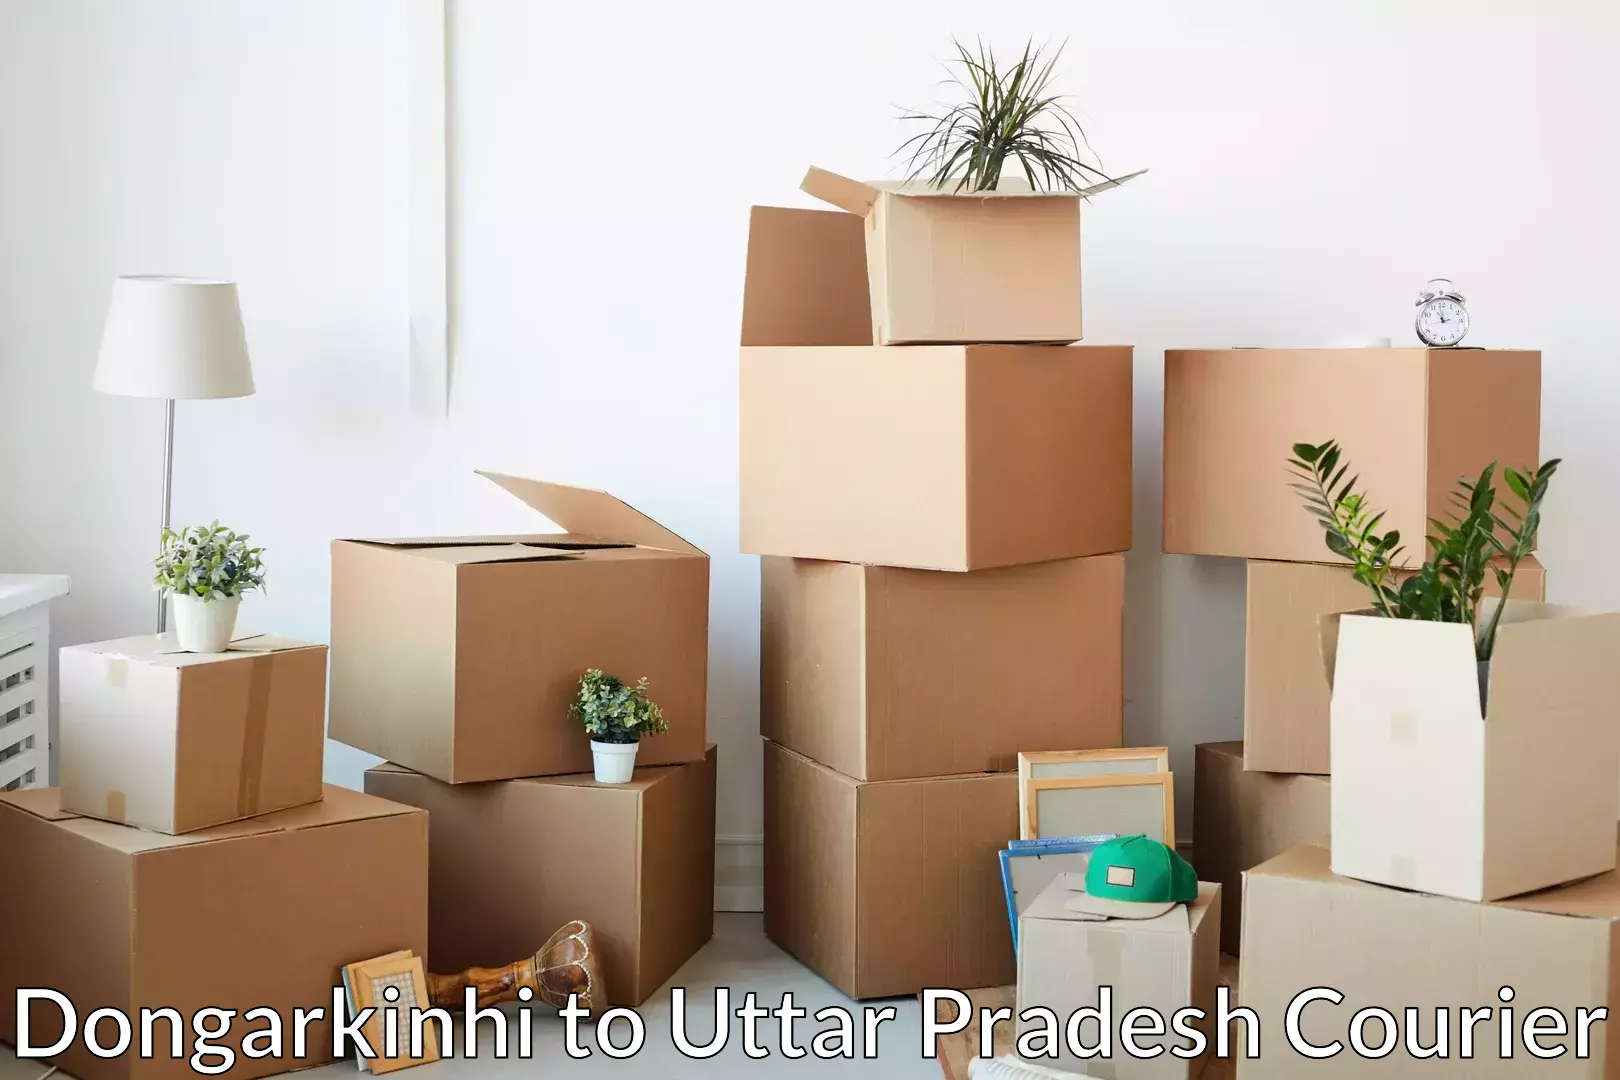 Home goods moving company Dongarkinhi to Uttar Pradesh